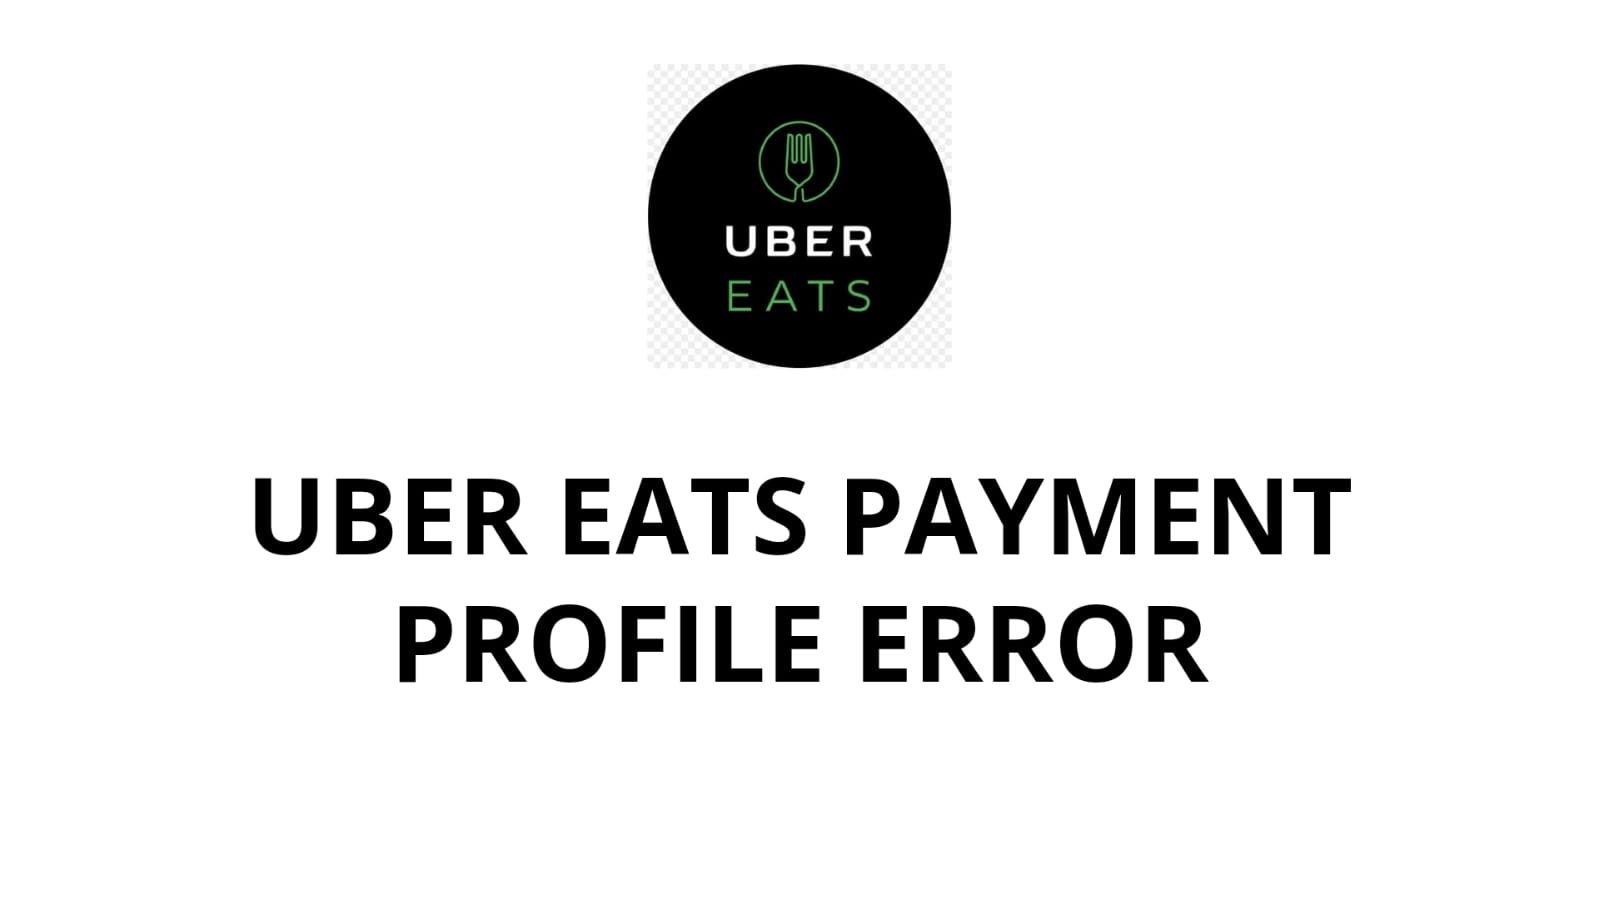 Uber Eats Error verifying payment profile